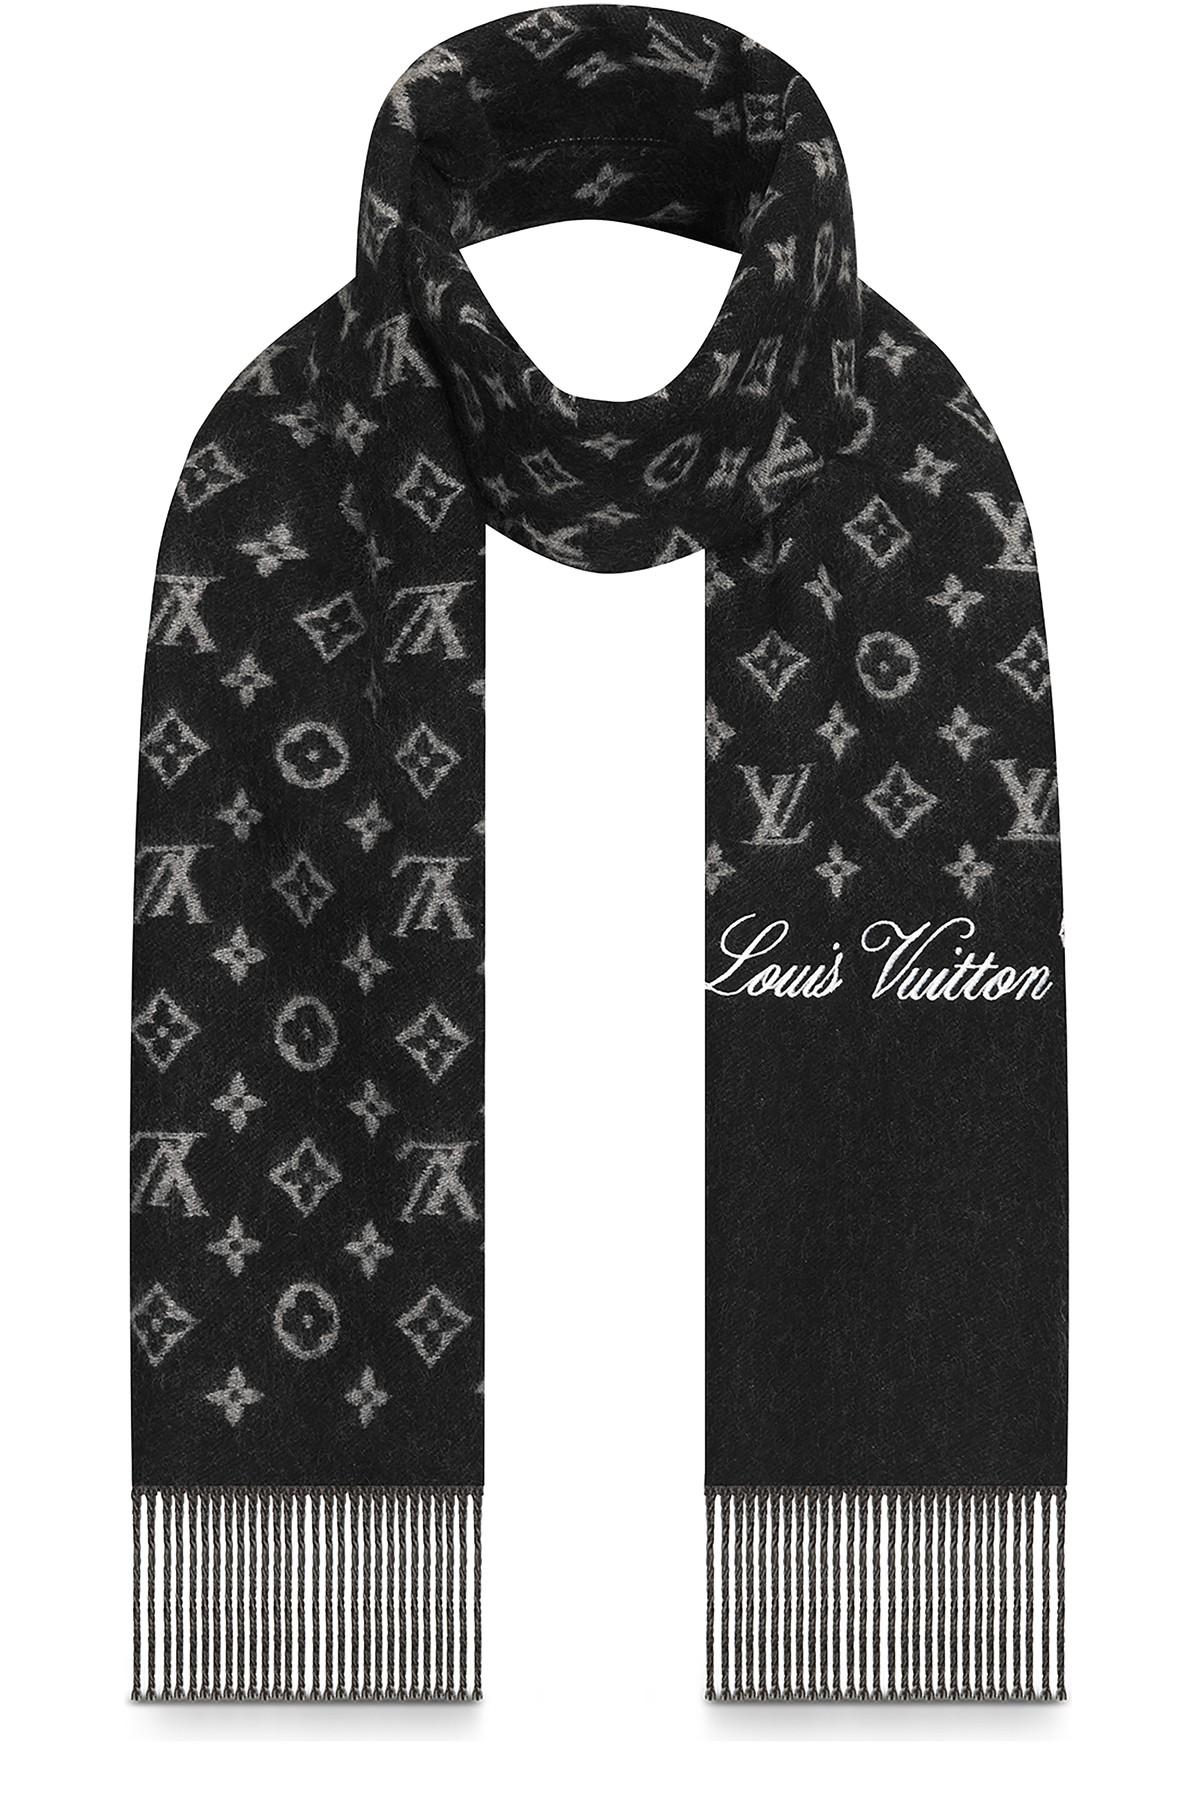 Louis Vuitton Louis Vuitton Gray x White Cashmere Scarf Muffler